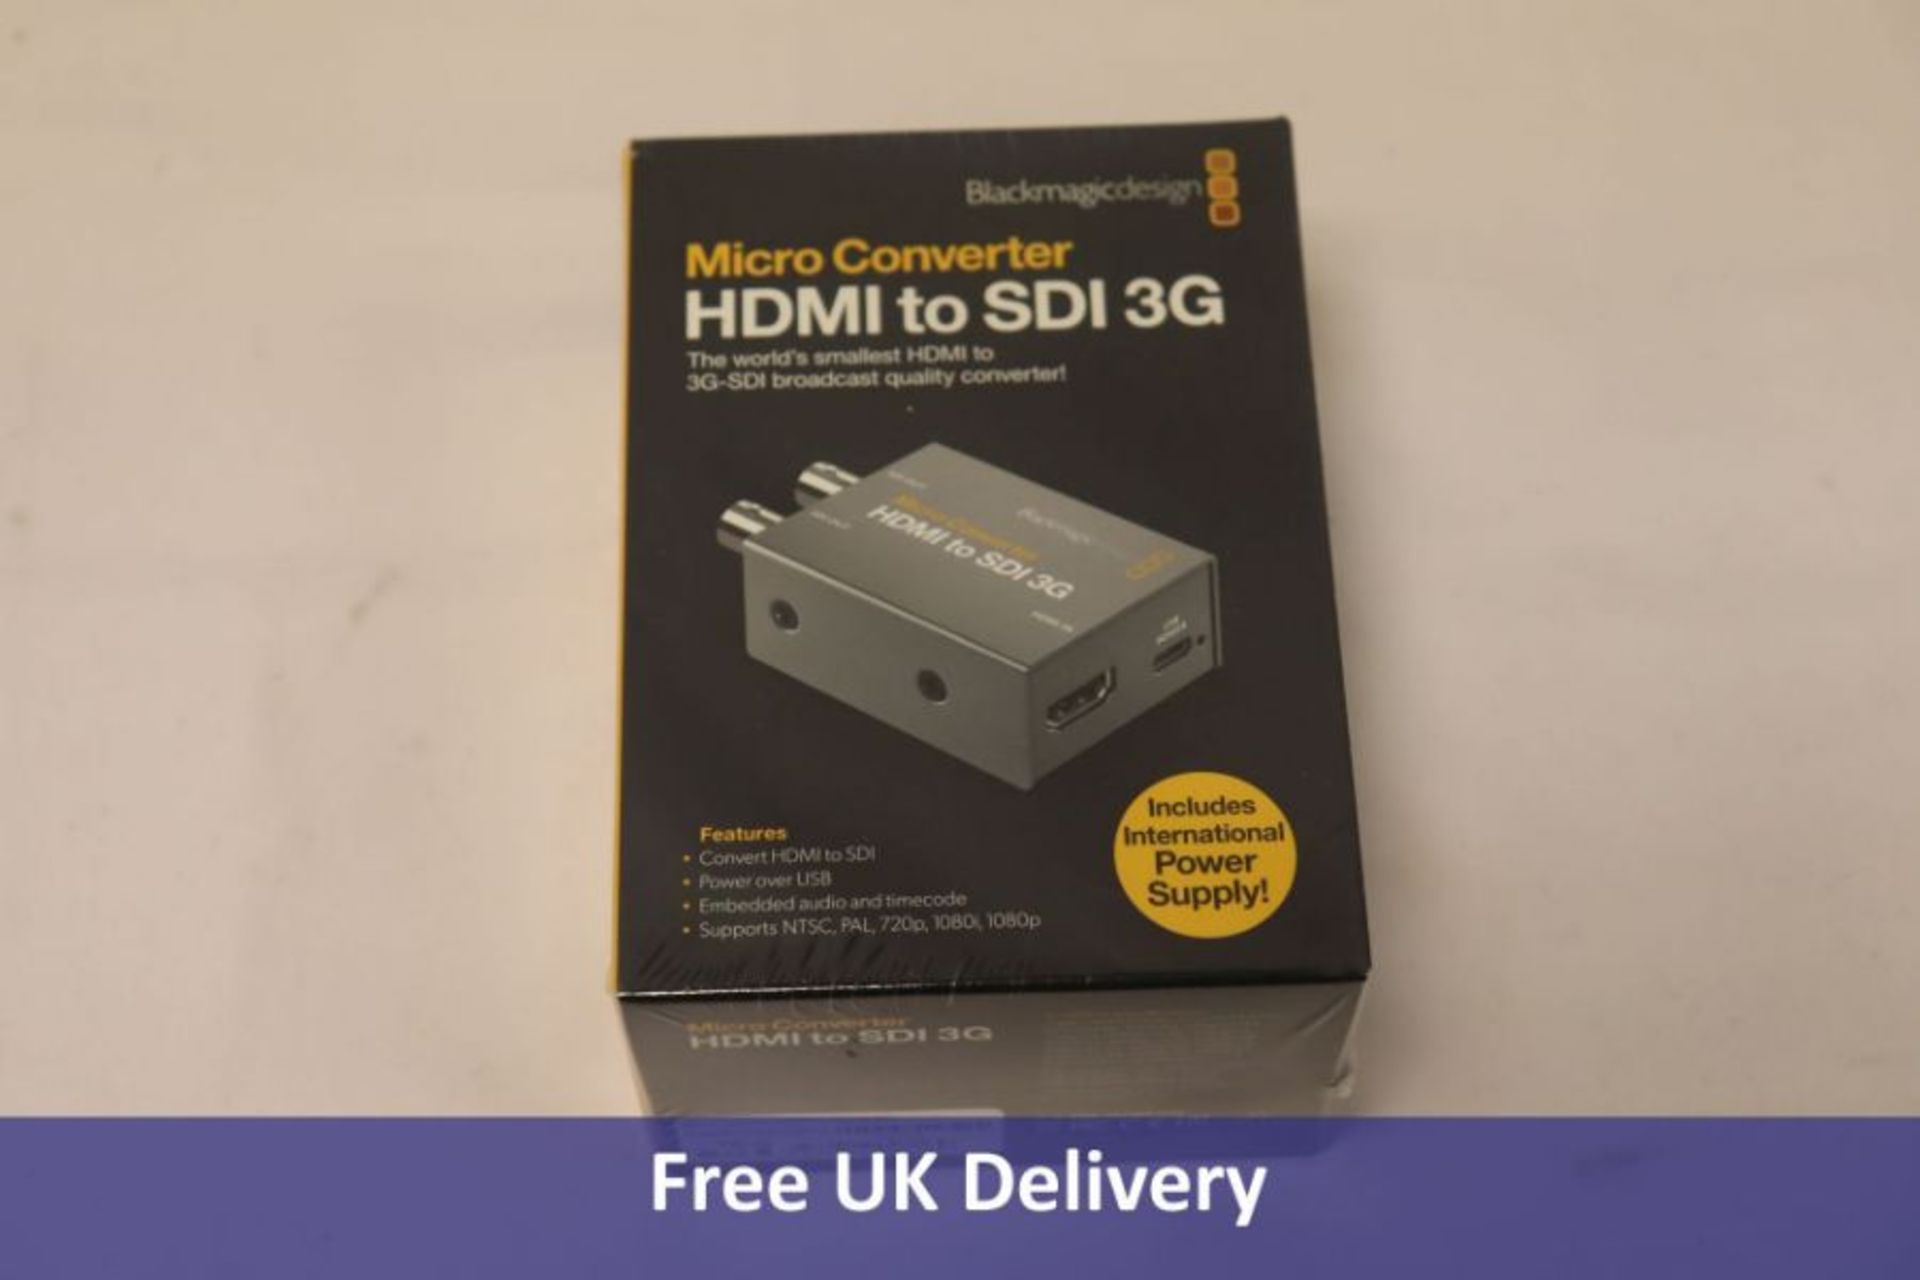 Eight Blackmagic Micro Converter HDMI to SDI 3G